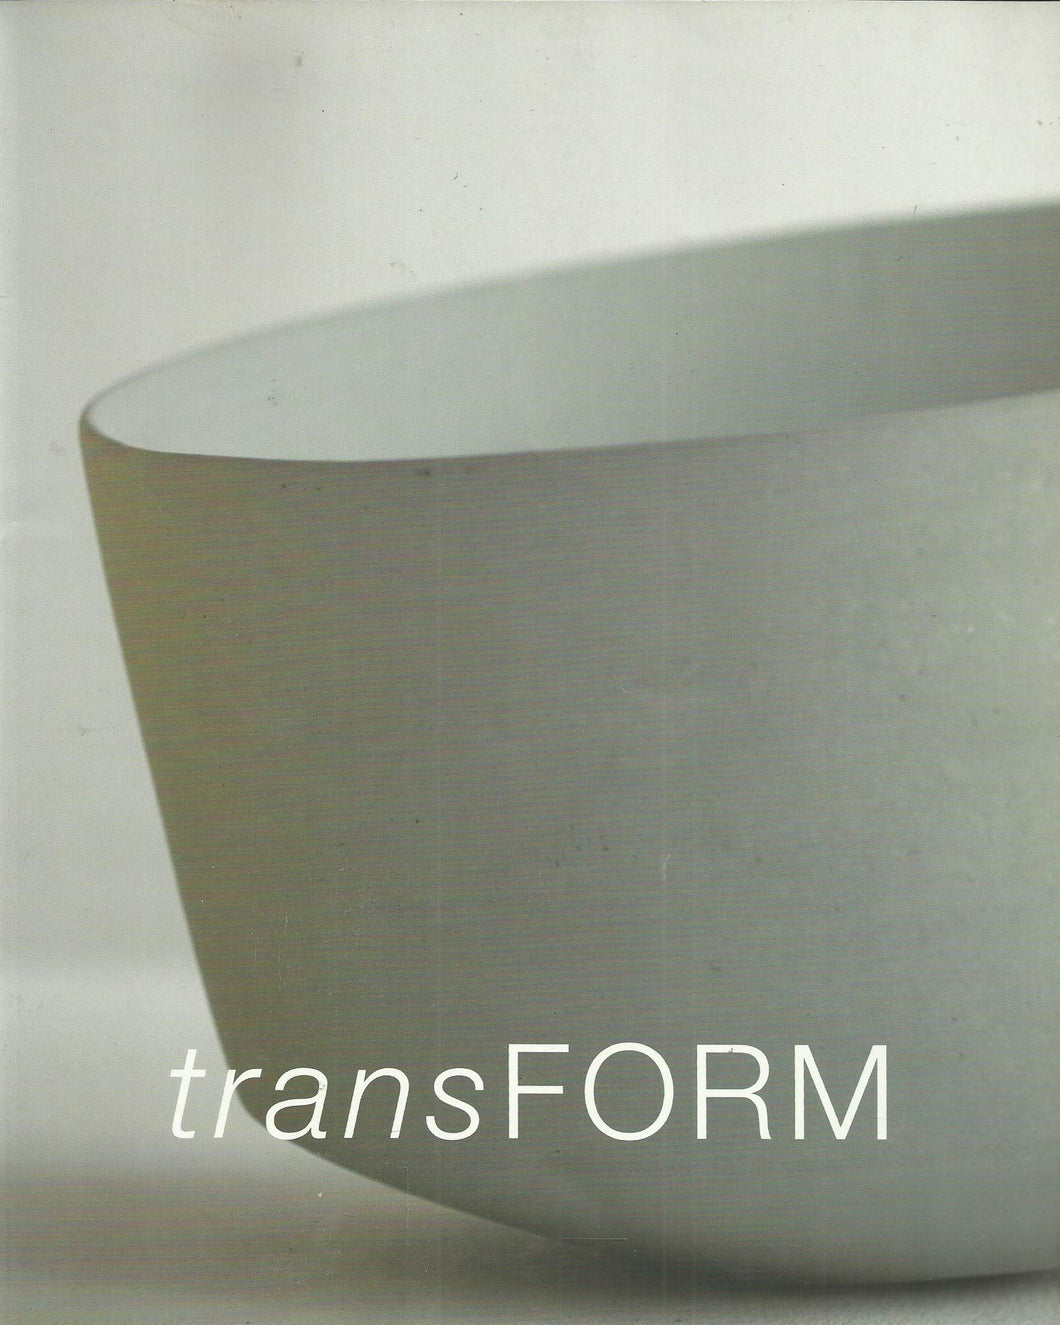 TransFORM